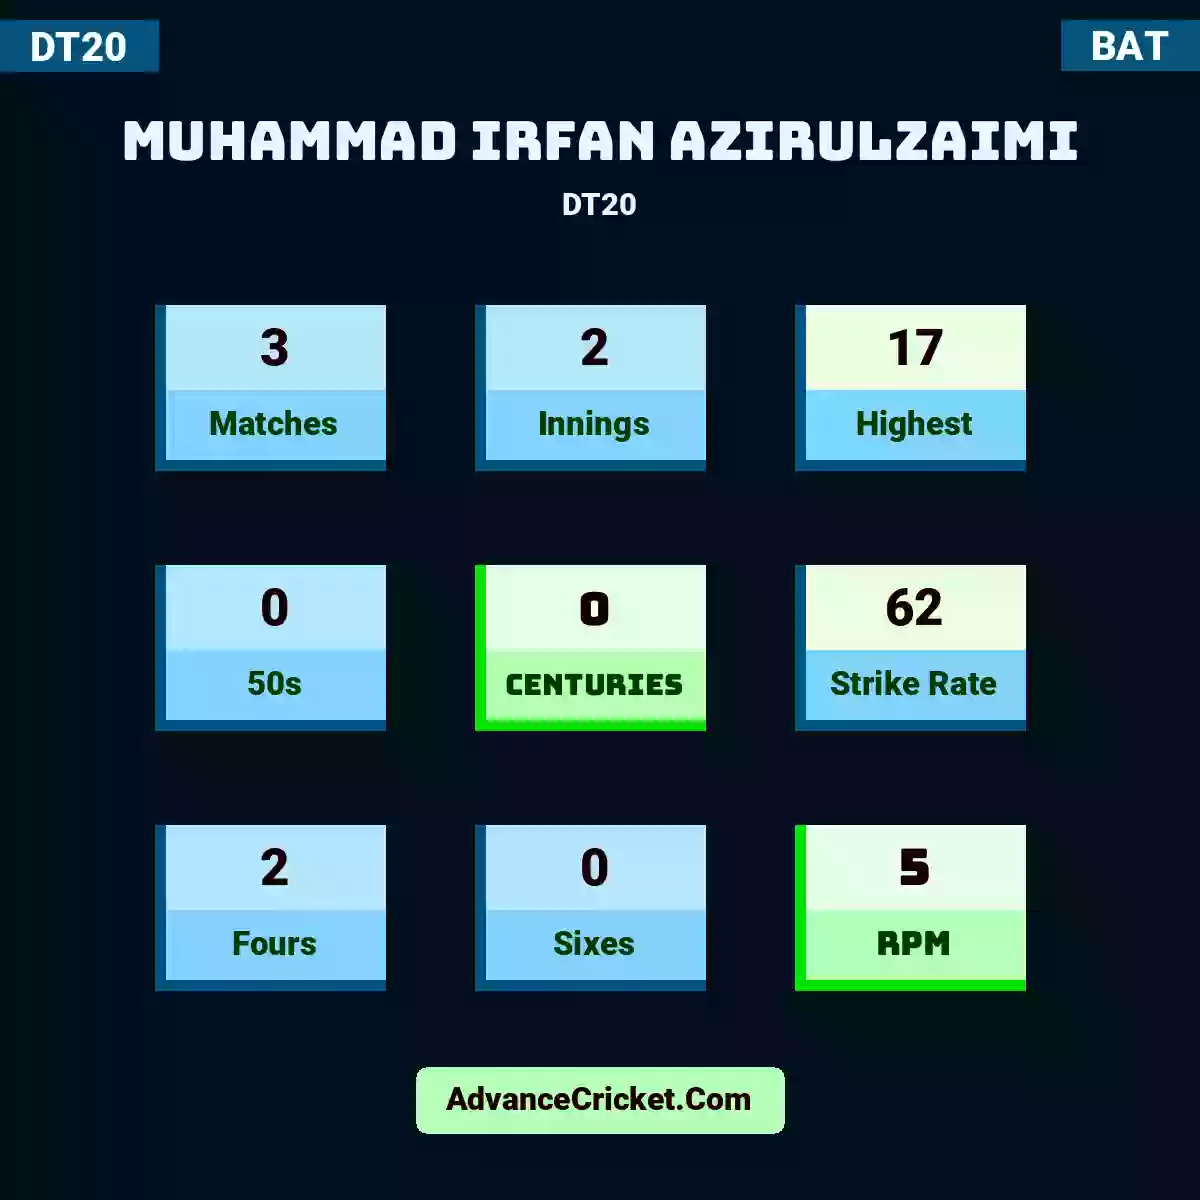 Muhammad Irfan Azirulzaimi DT20 , Muhammad Irfan Azirulzaimi played 3 matches, scored 17 runs as highest, 0 half-centuries, and 0 centuries, with a strike rate of 62. M.Irfan.Azirulzaimi hit 2 fours and 0 sixes, with an RPM of 5.